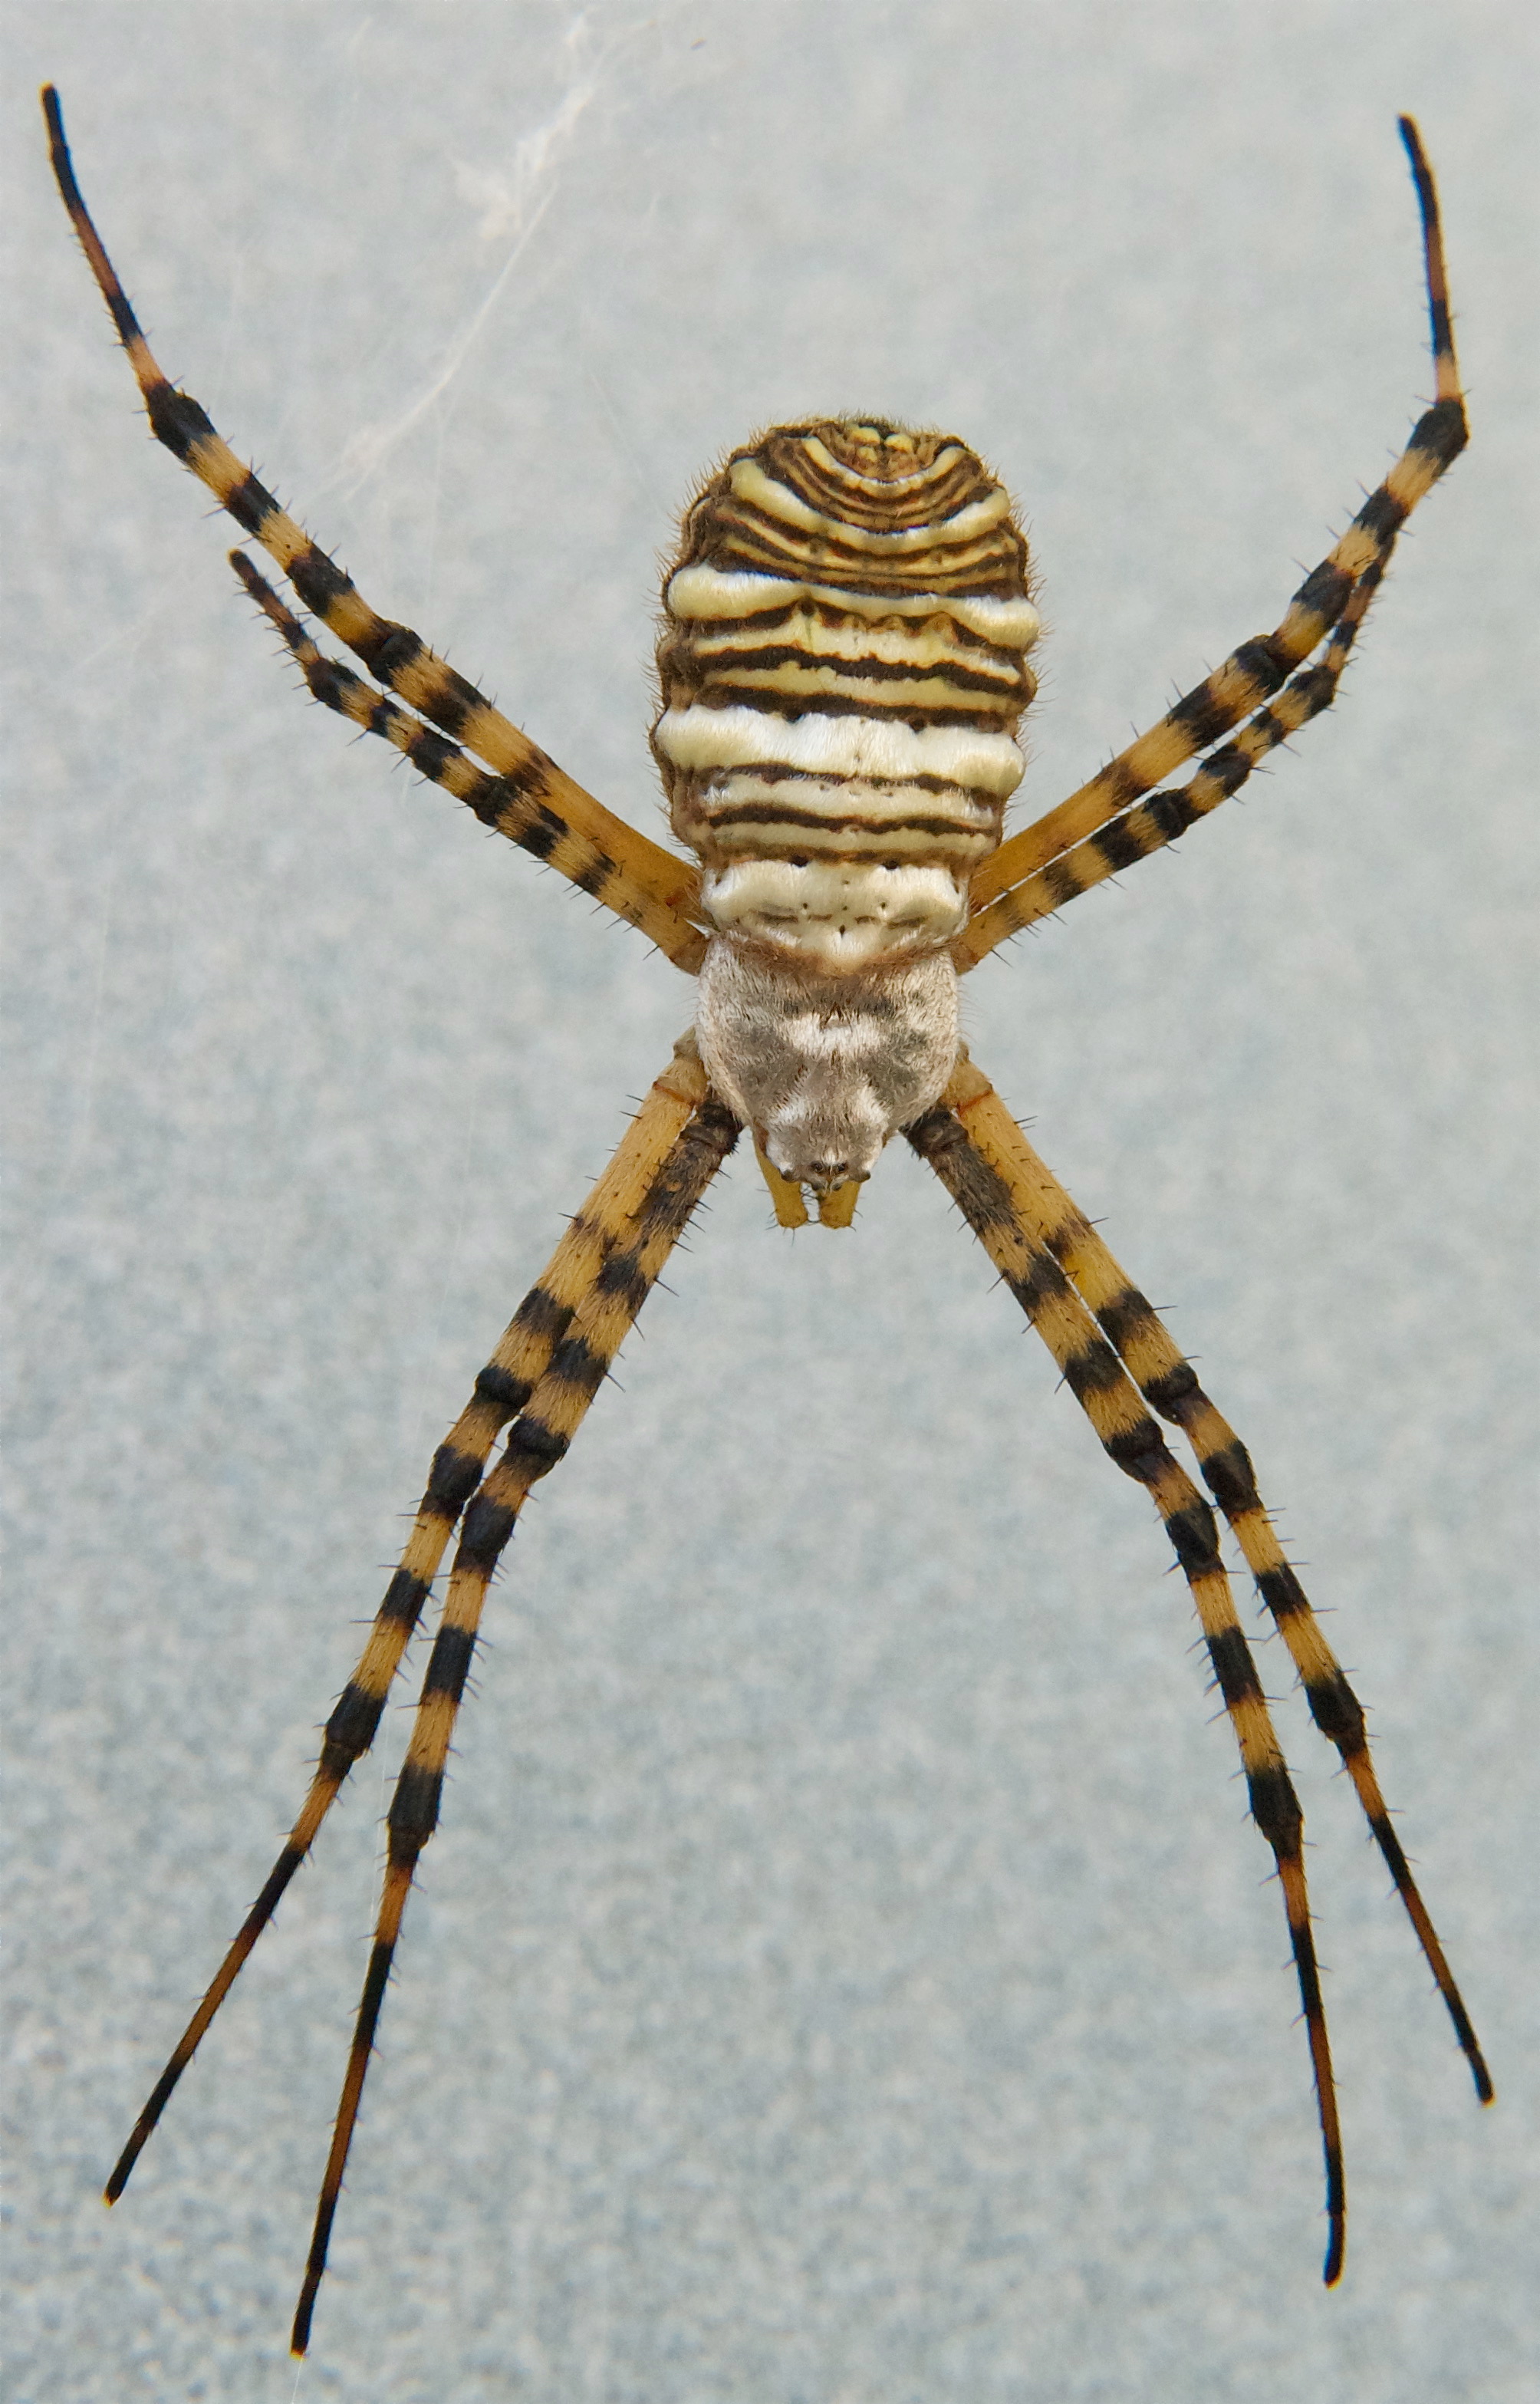 Banded Garden Spider (Argiope trifasciata) - Plants and Animals of Northeast Colorado2008 x 3134